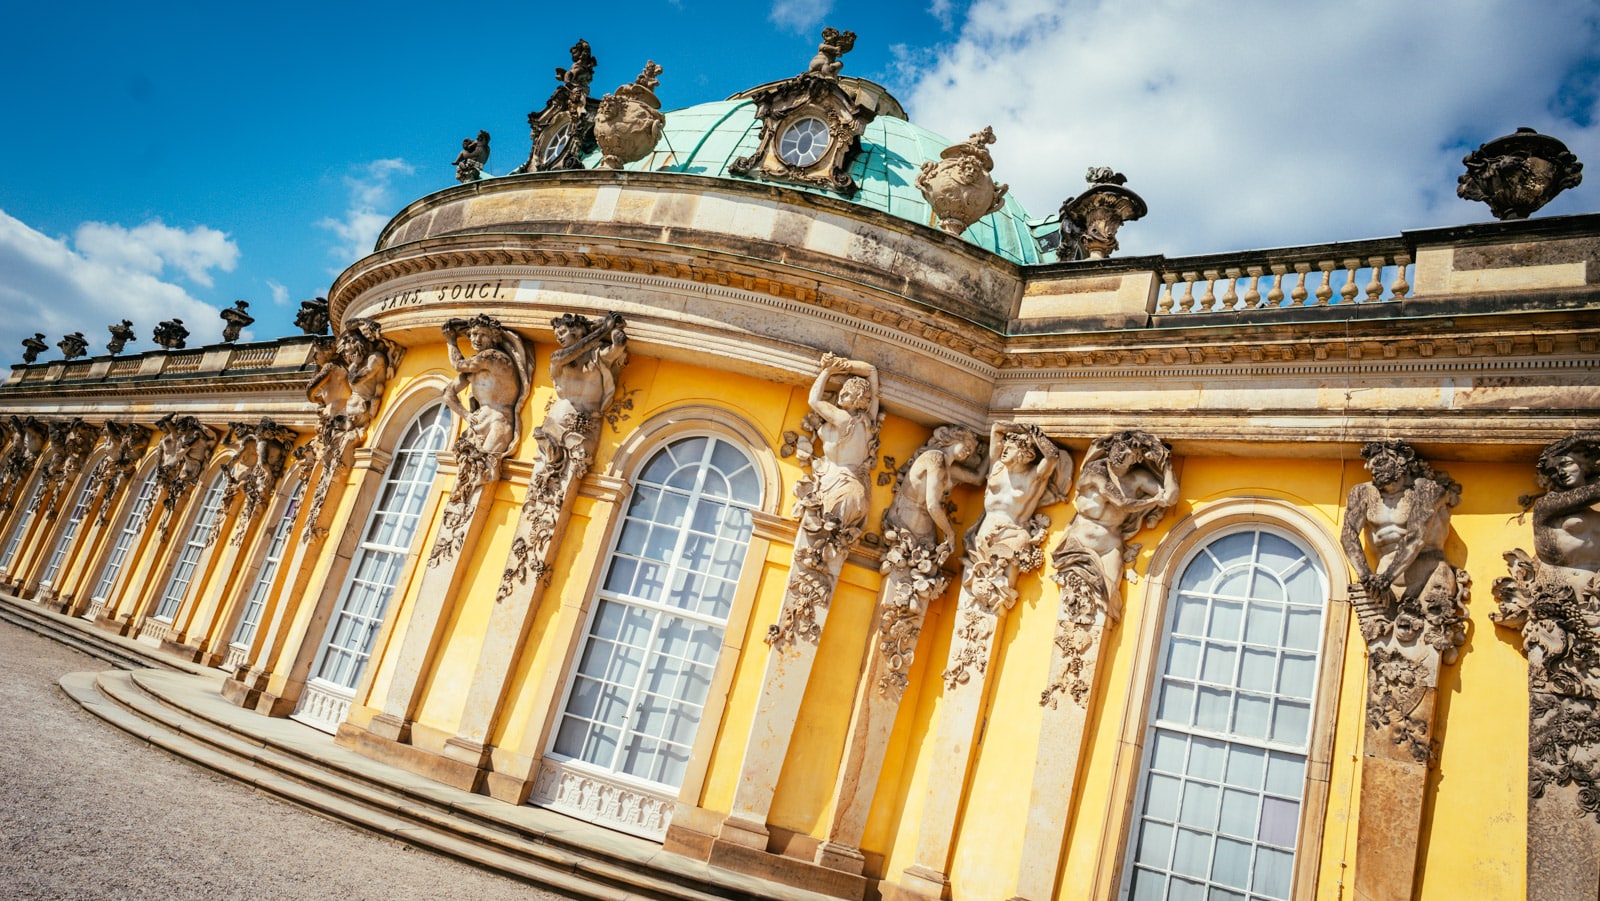 Frederick the Great's palace - Potsdam Sanssouci